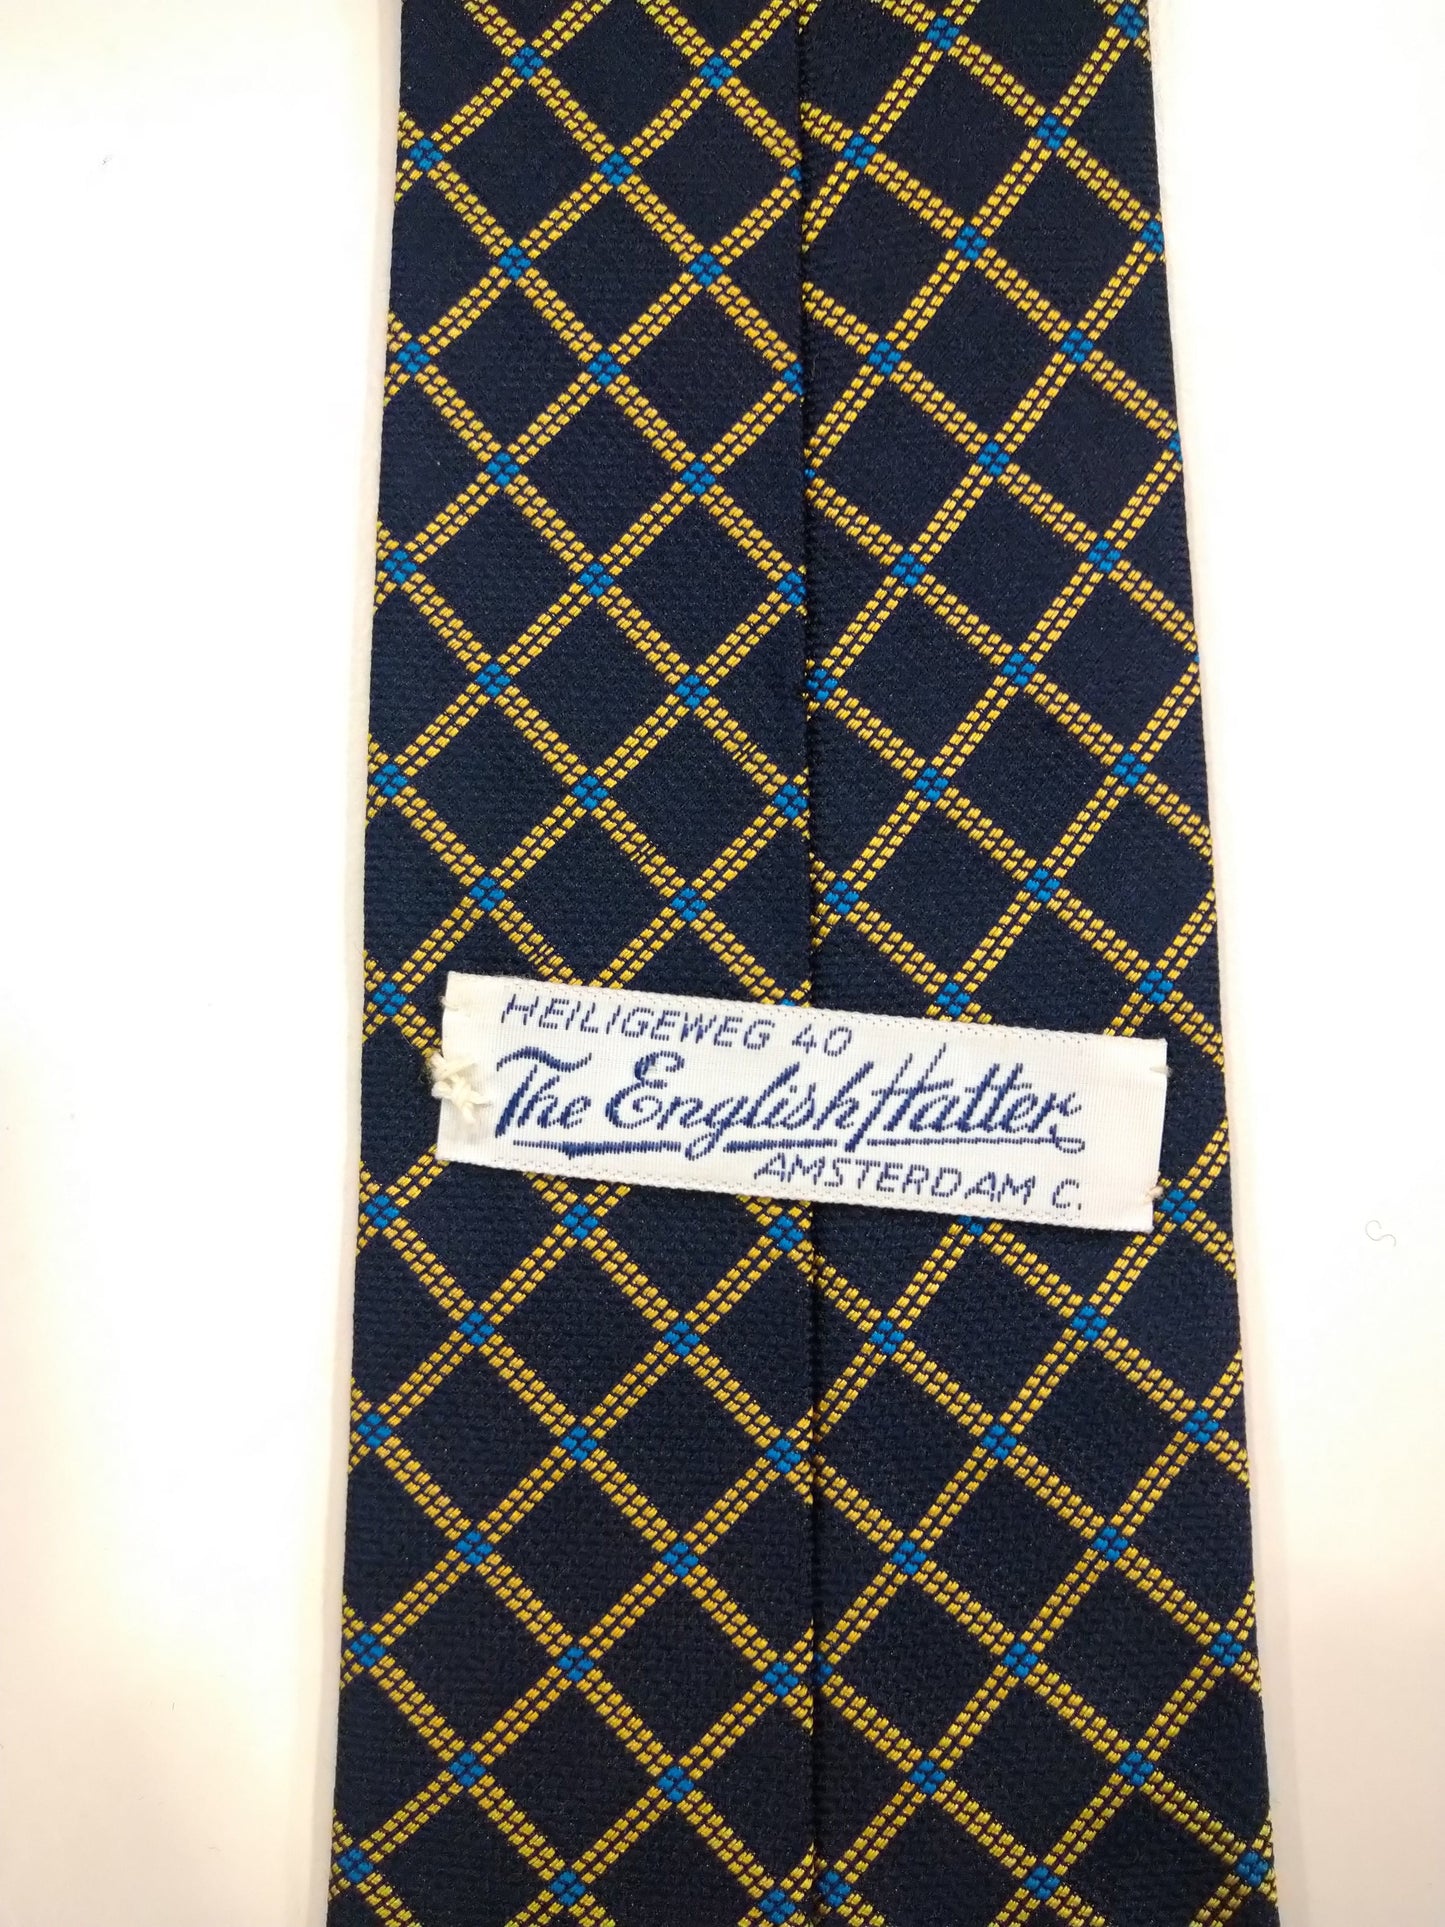 La corbata de seda de sombrerero inglés. Motif amarillo azul.